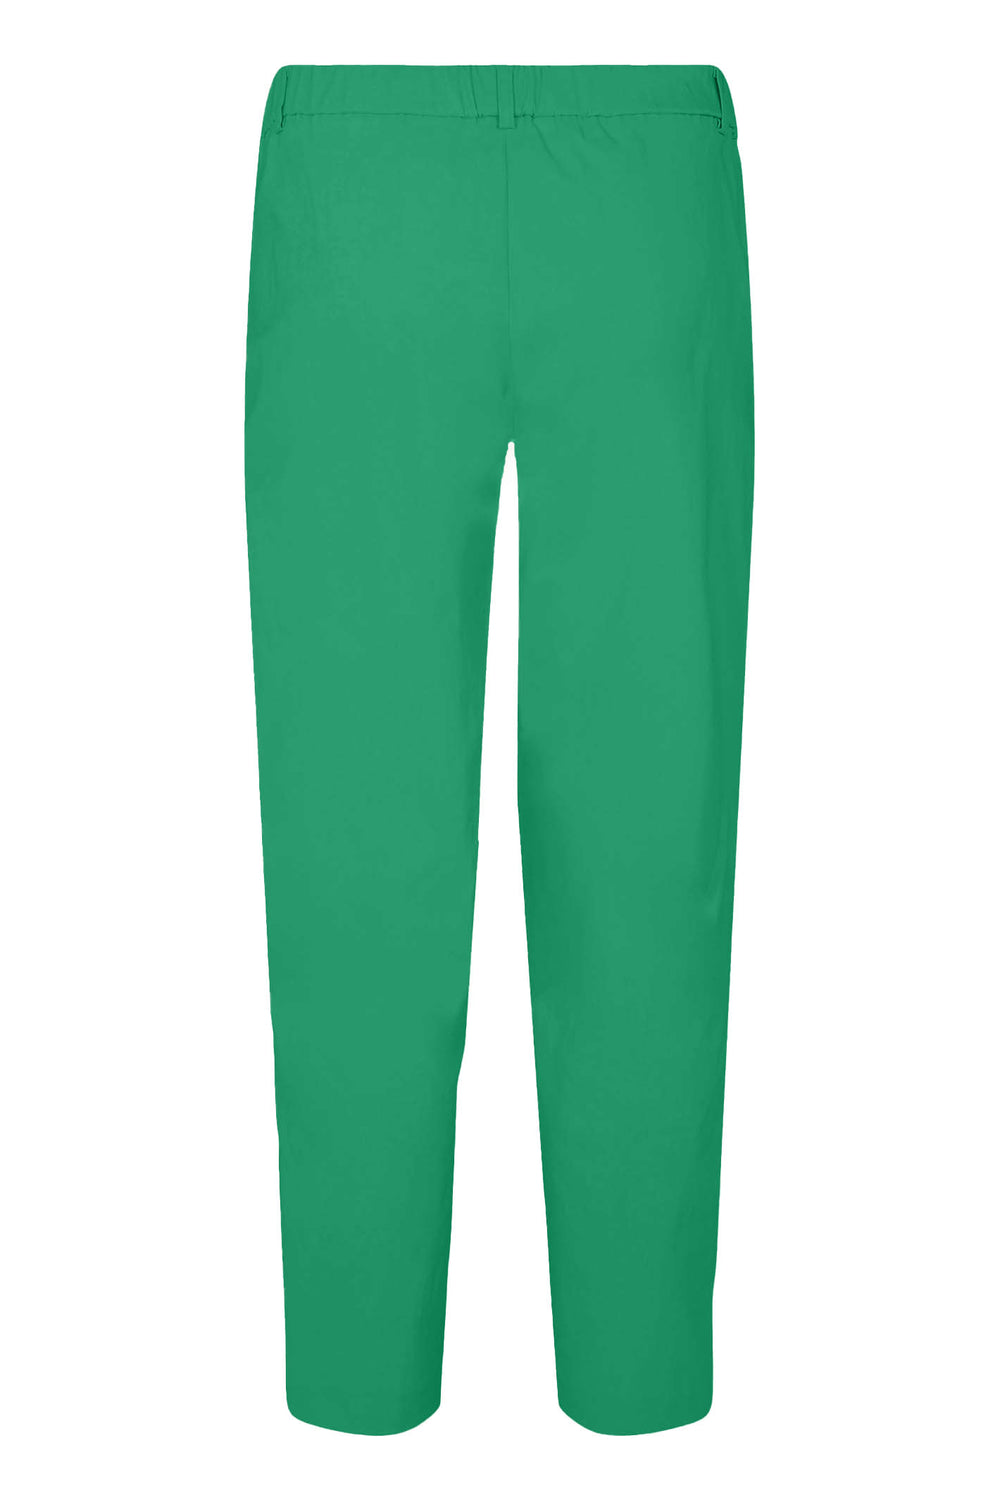 Robell 51409-05499-843 Sophia Green Pull-On 68cm Trousers - Olivia Grace Fashion